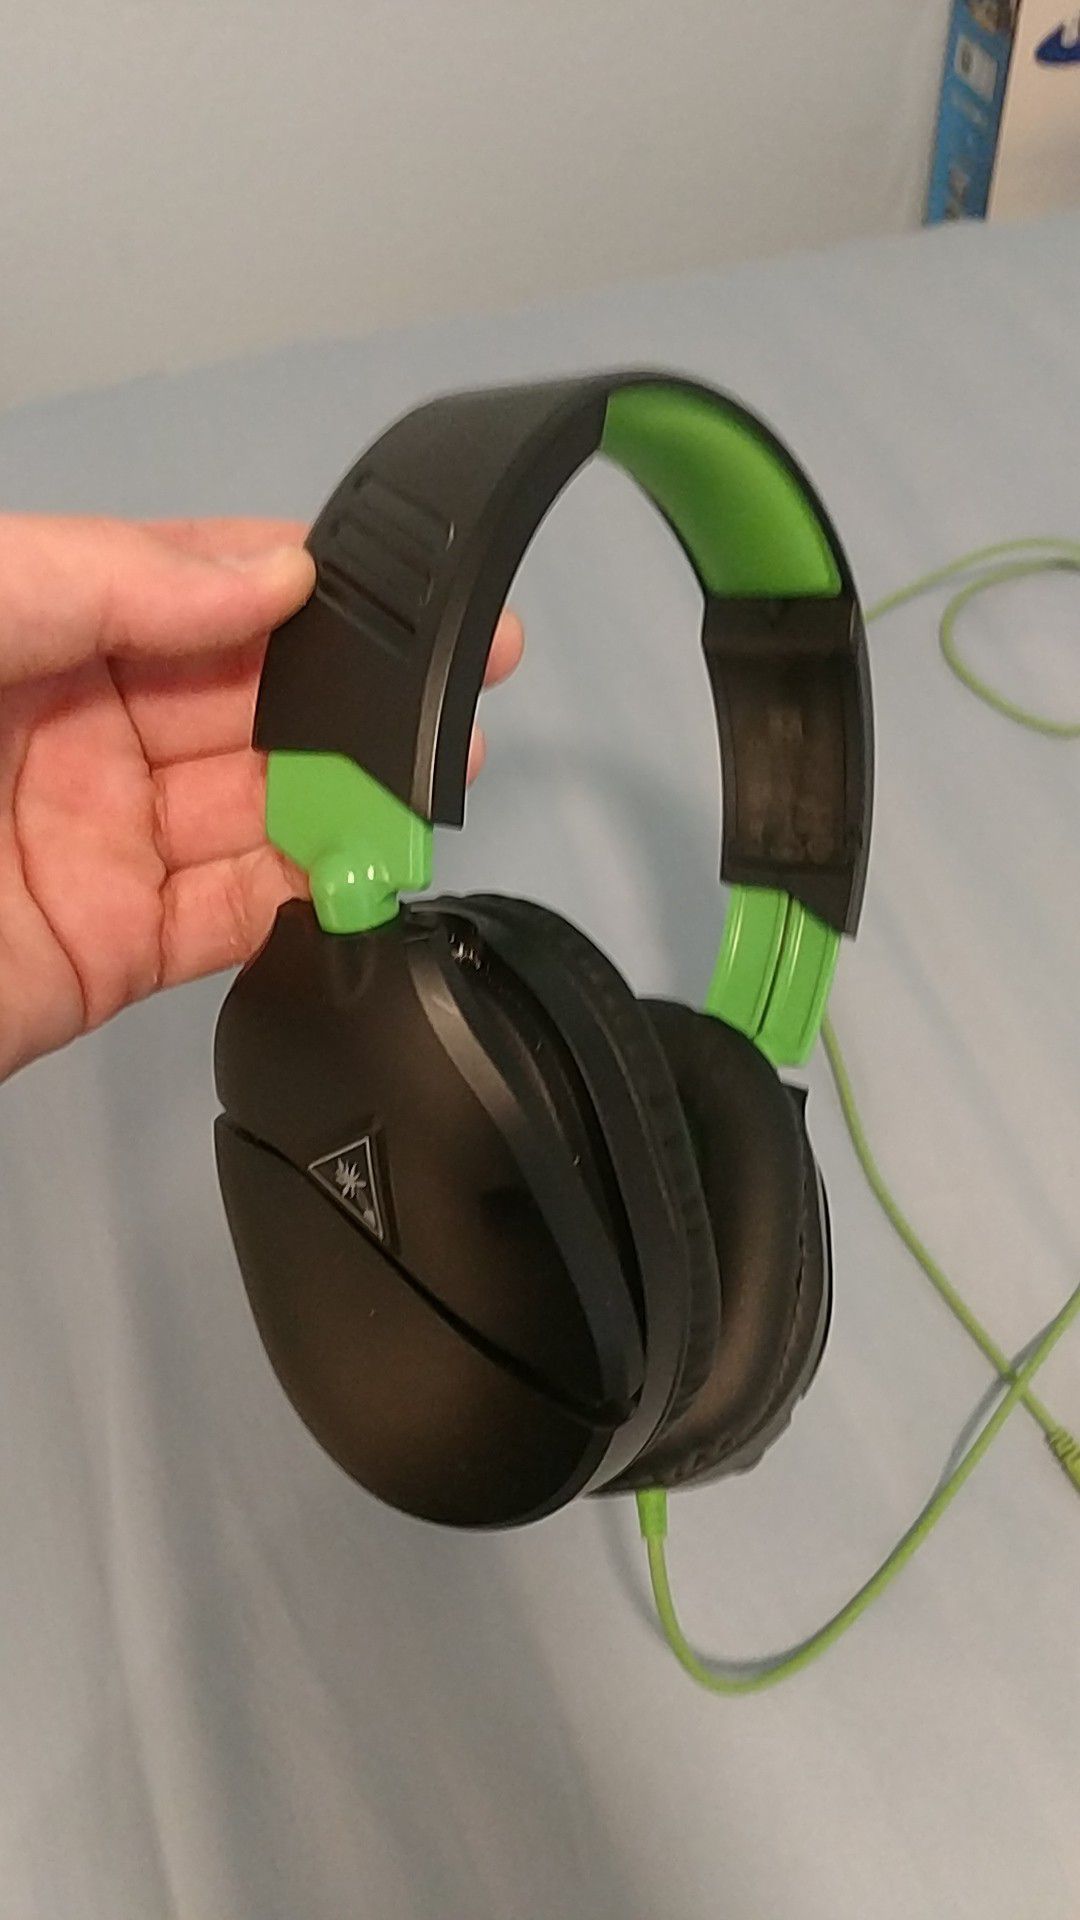 Xbox Turtle Beach headset